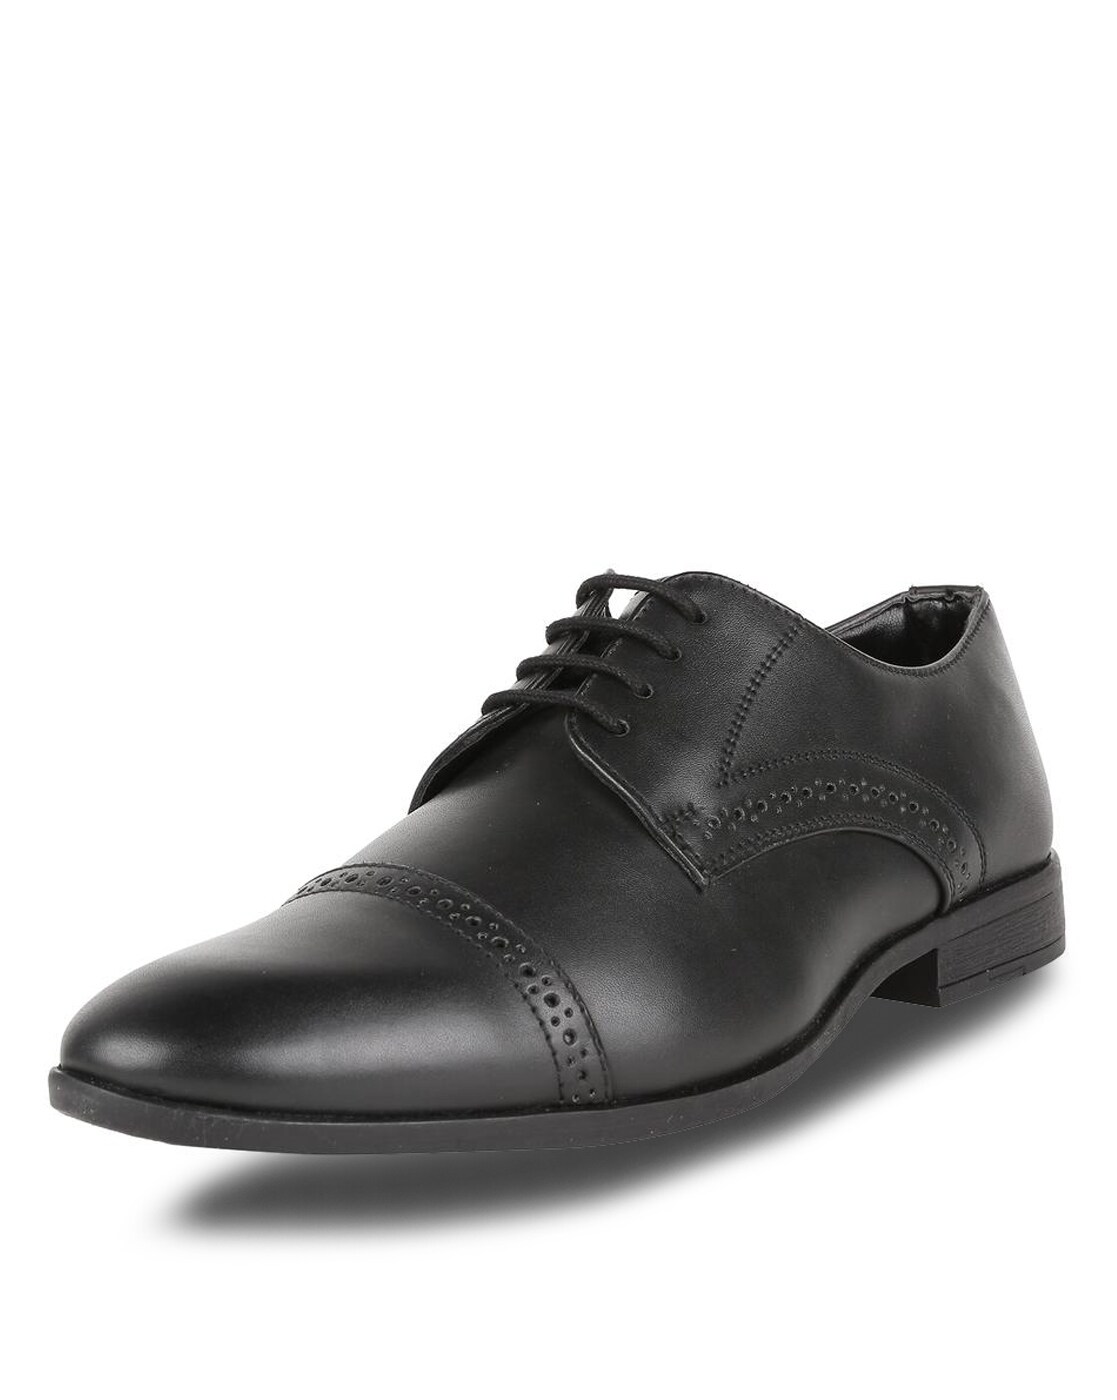 peter england black formal shoes